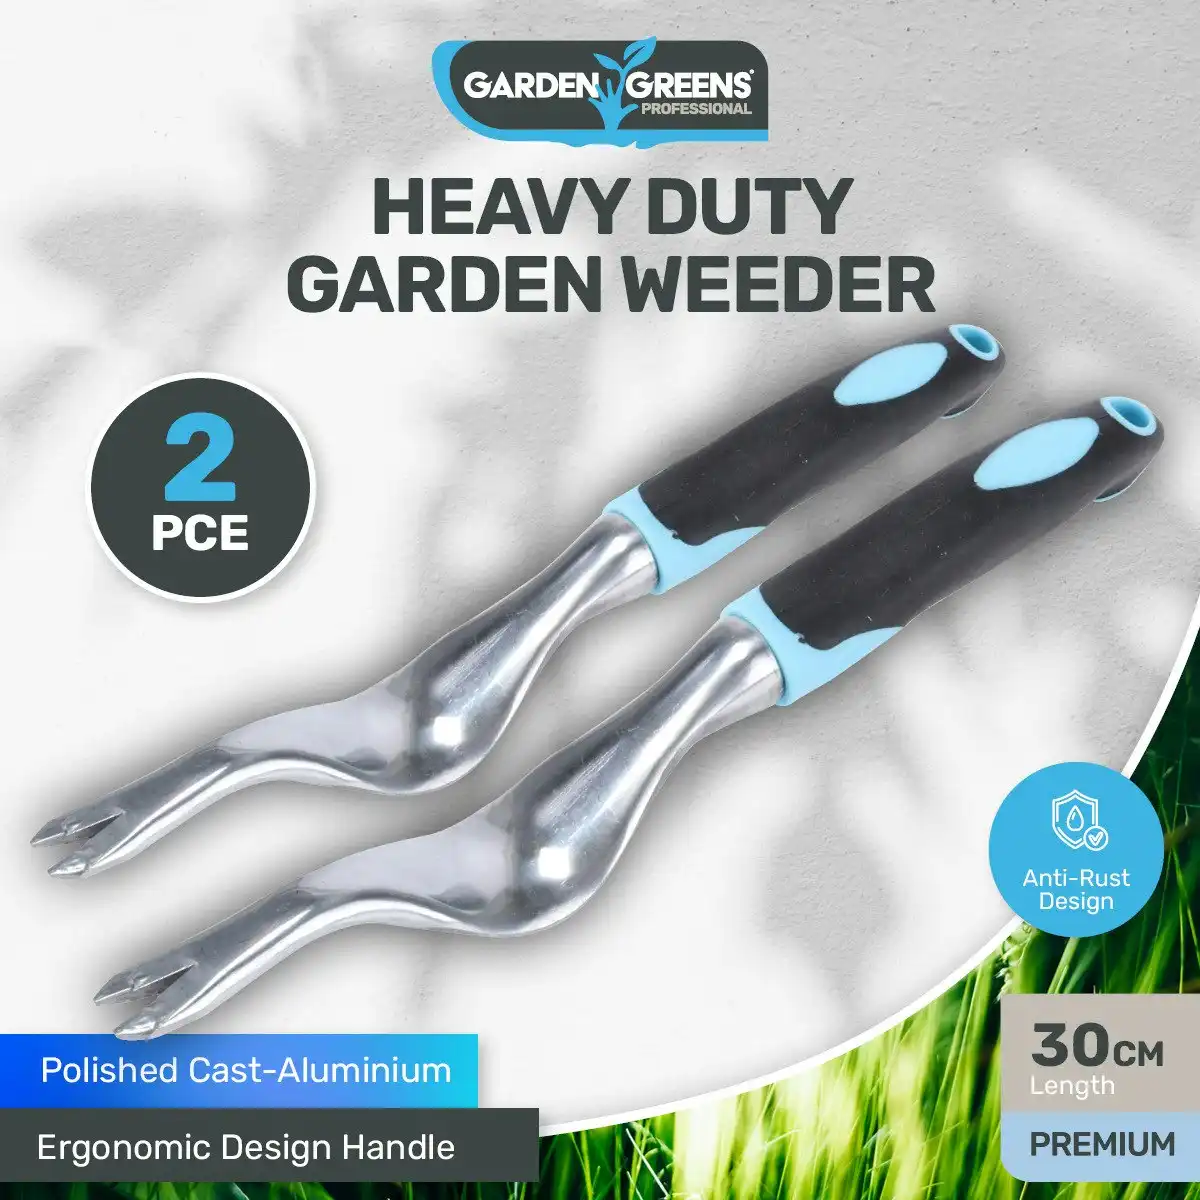 Garden Greens 2PK Garden Weeding Hand Tool Anti Rust Premium Quality 30cm